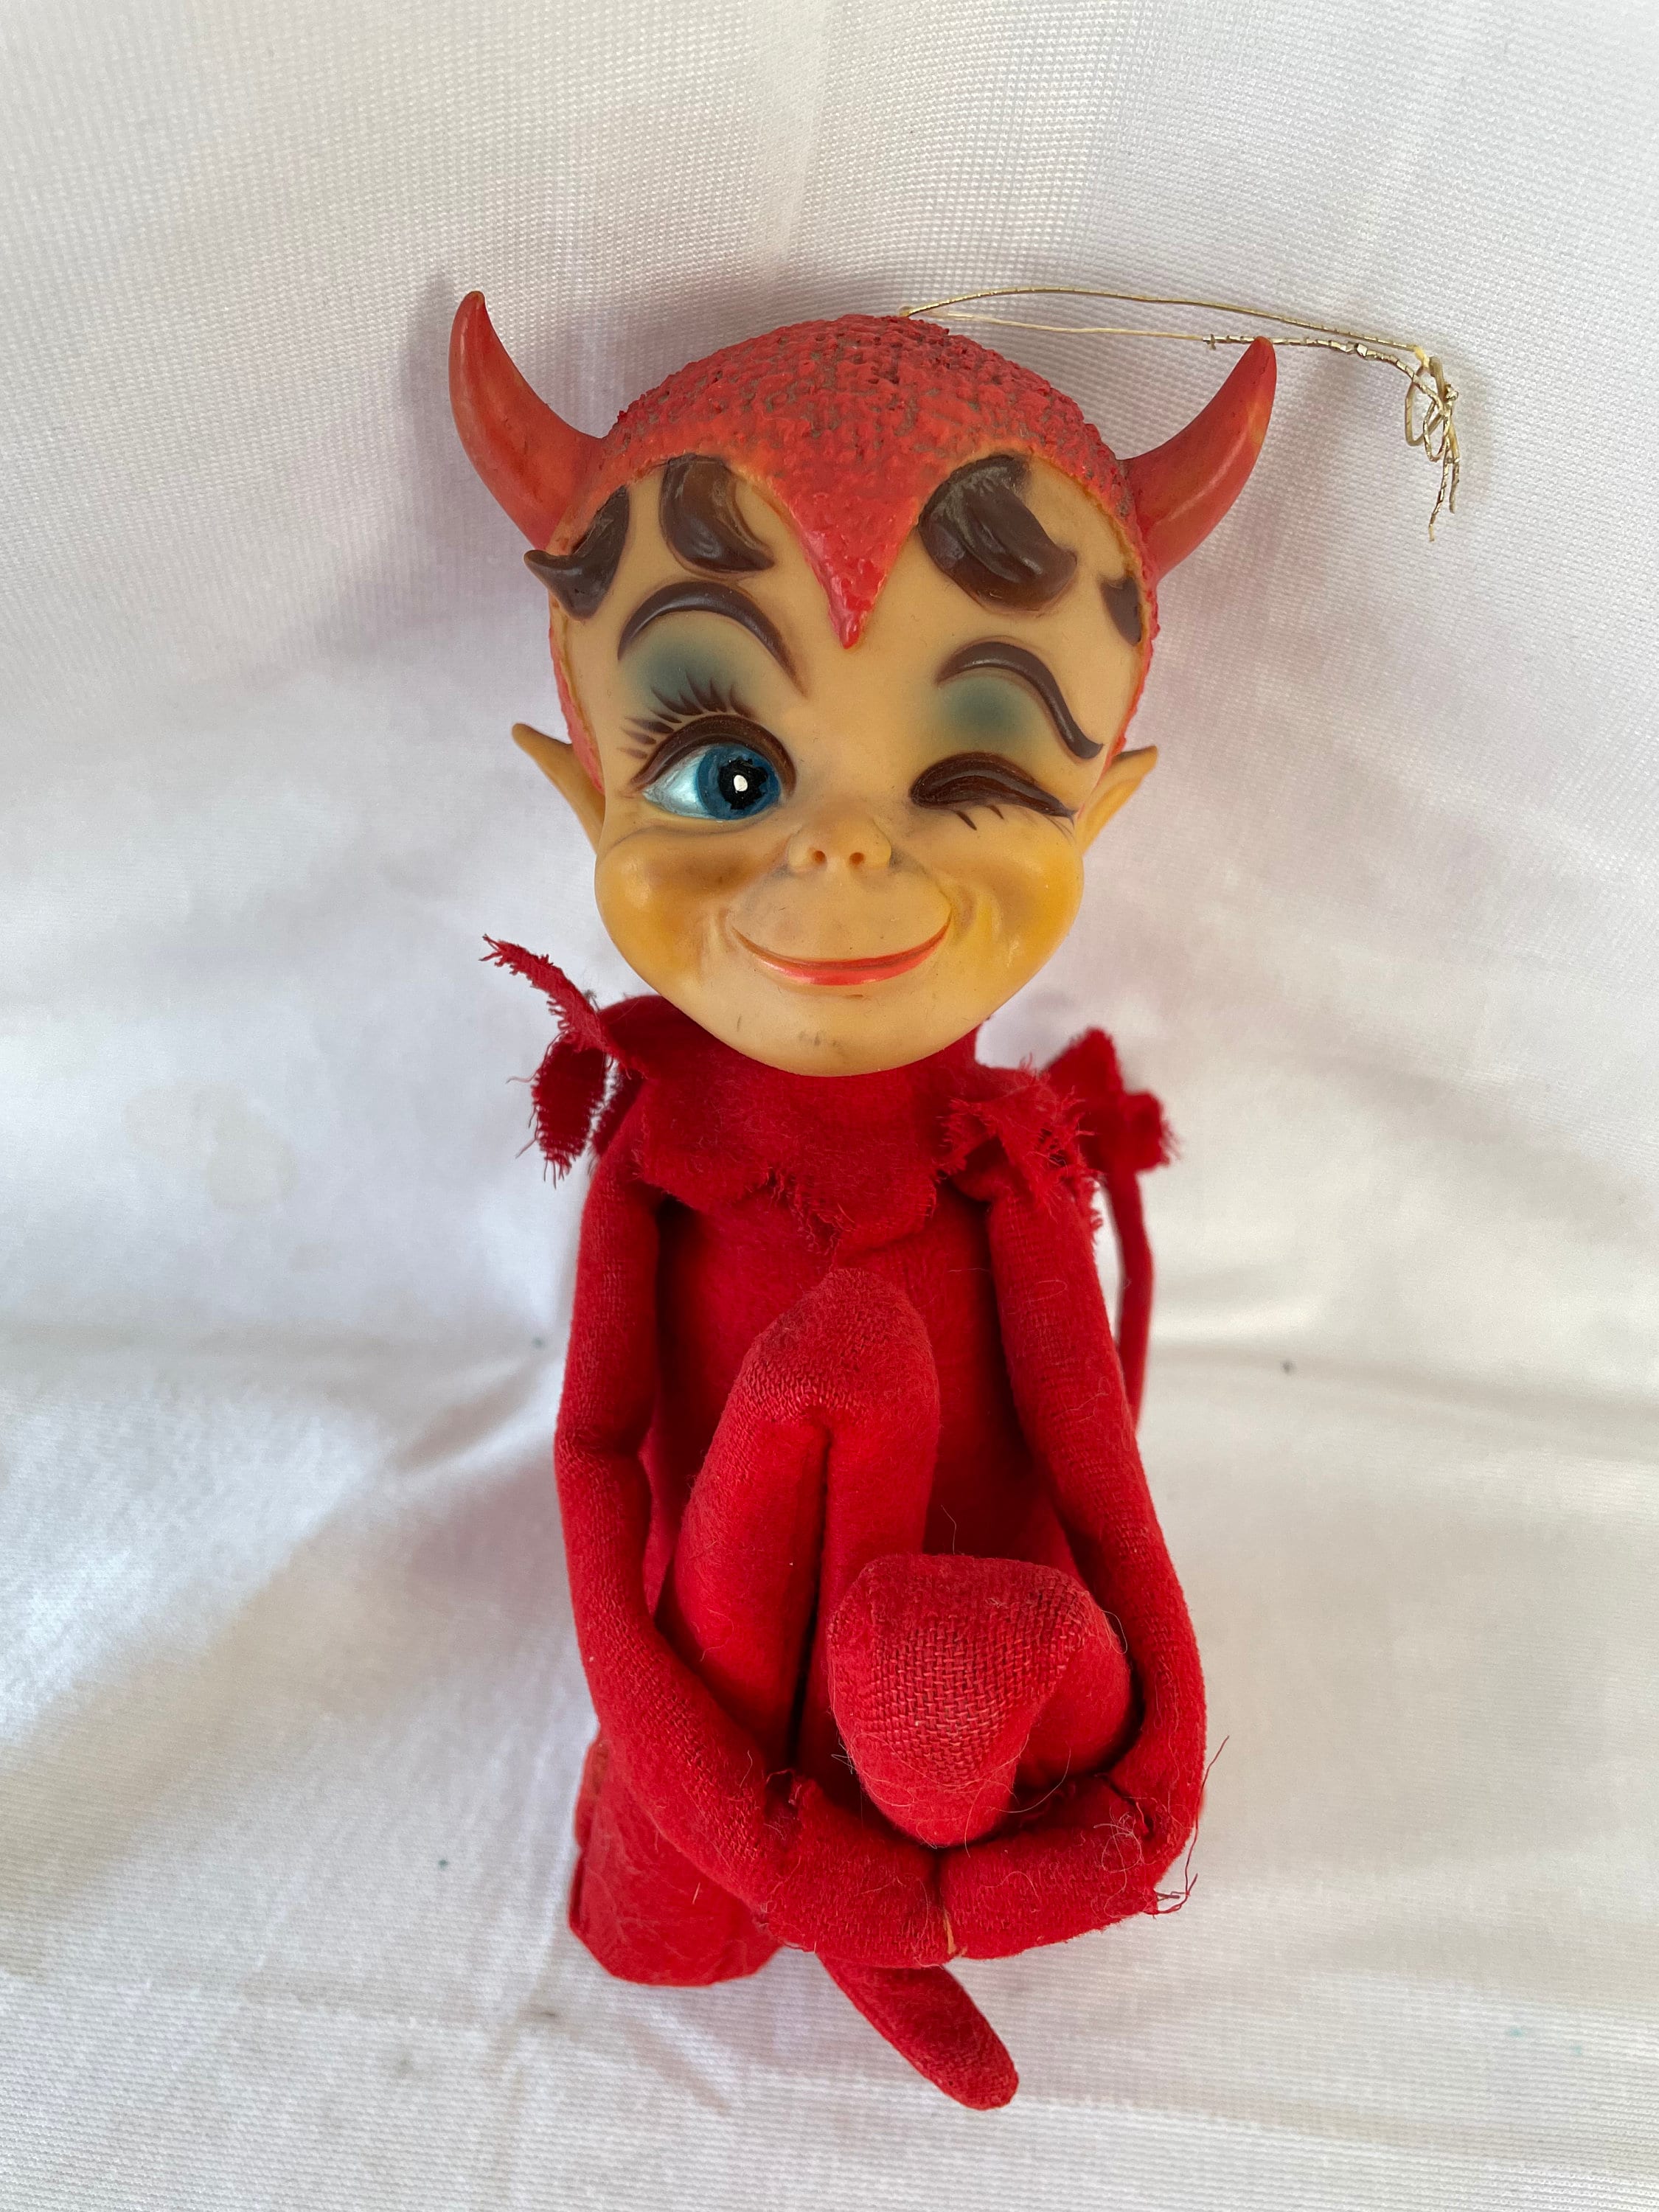 Red Devil Figurine - Etsy